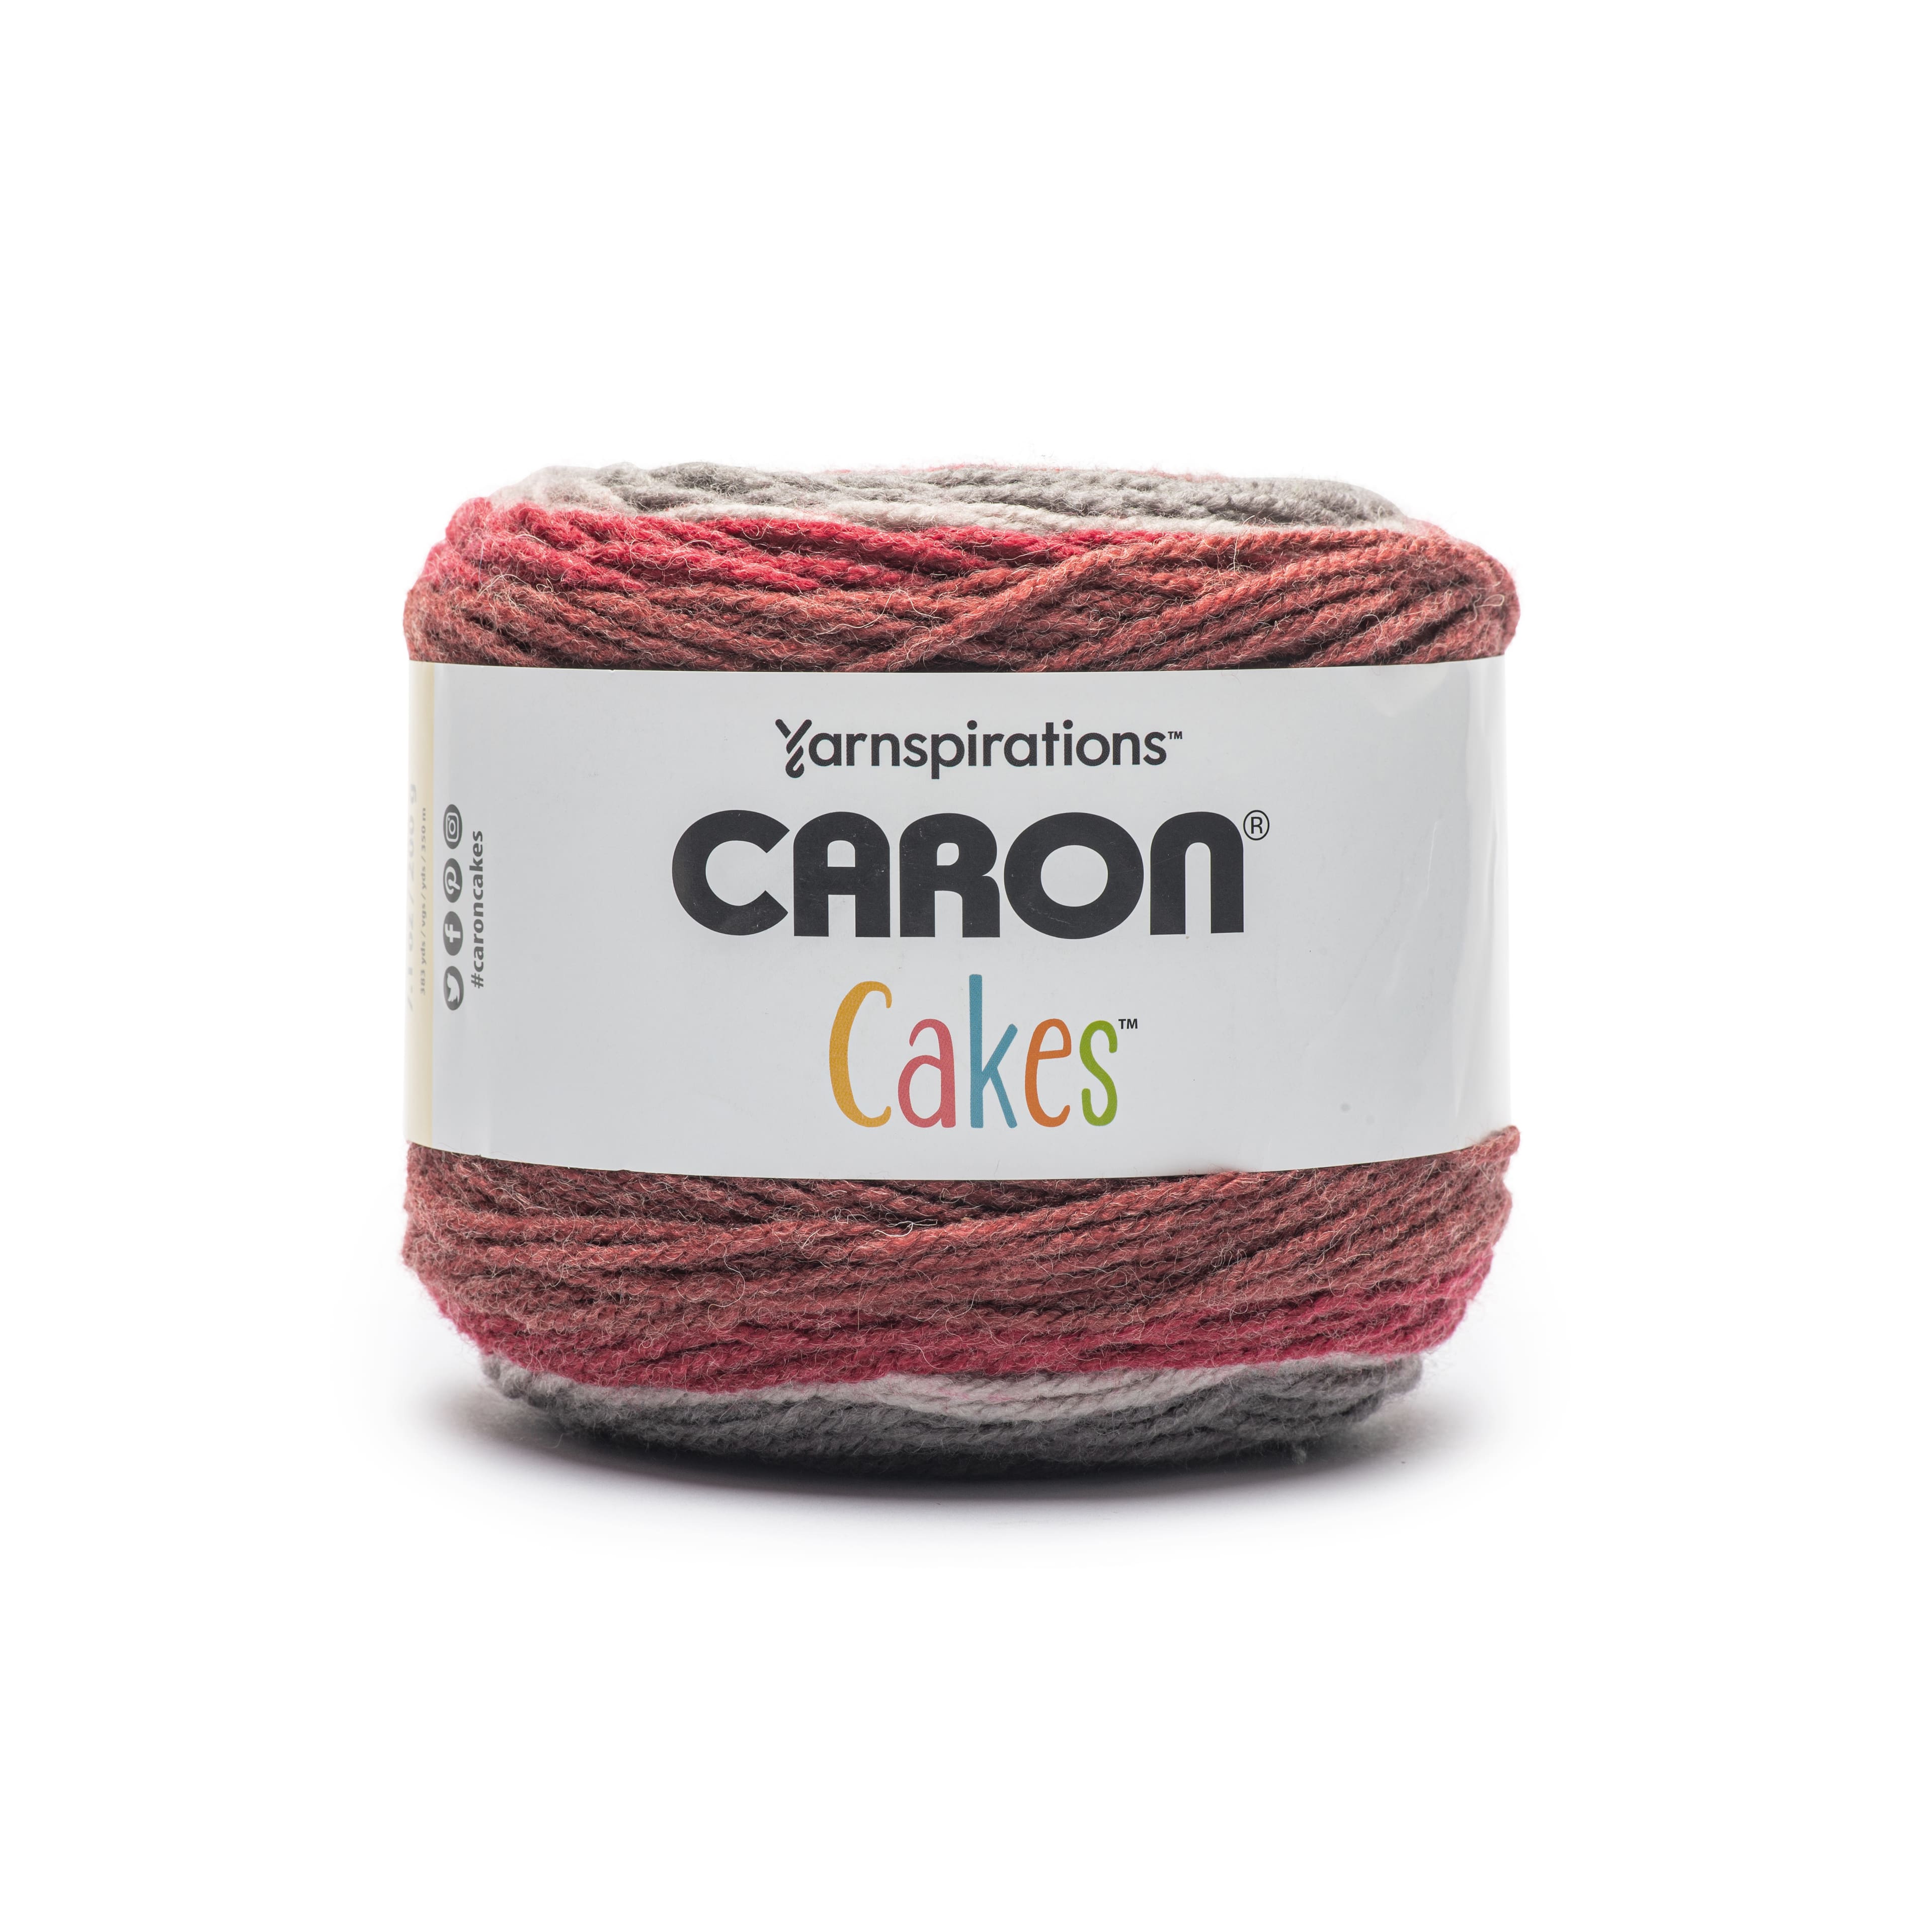 Caron Big Cakes Yarn Rainbow Jellys